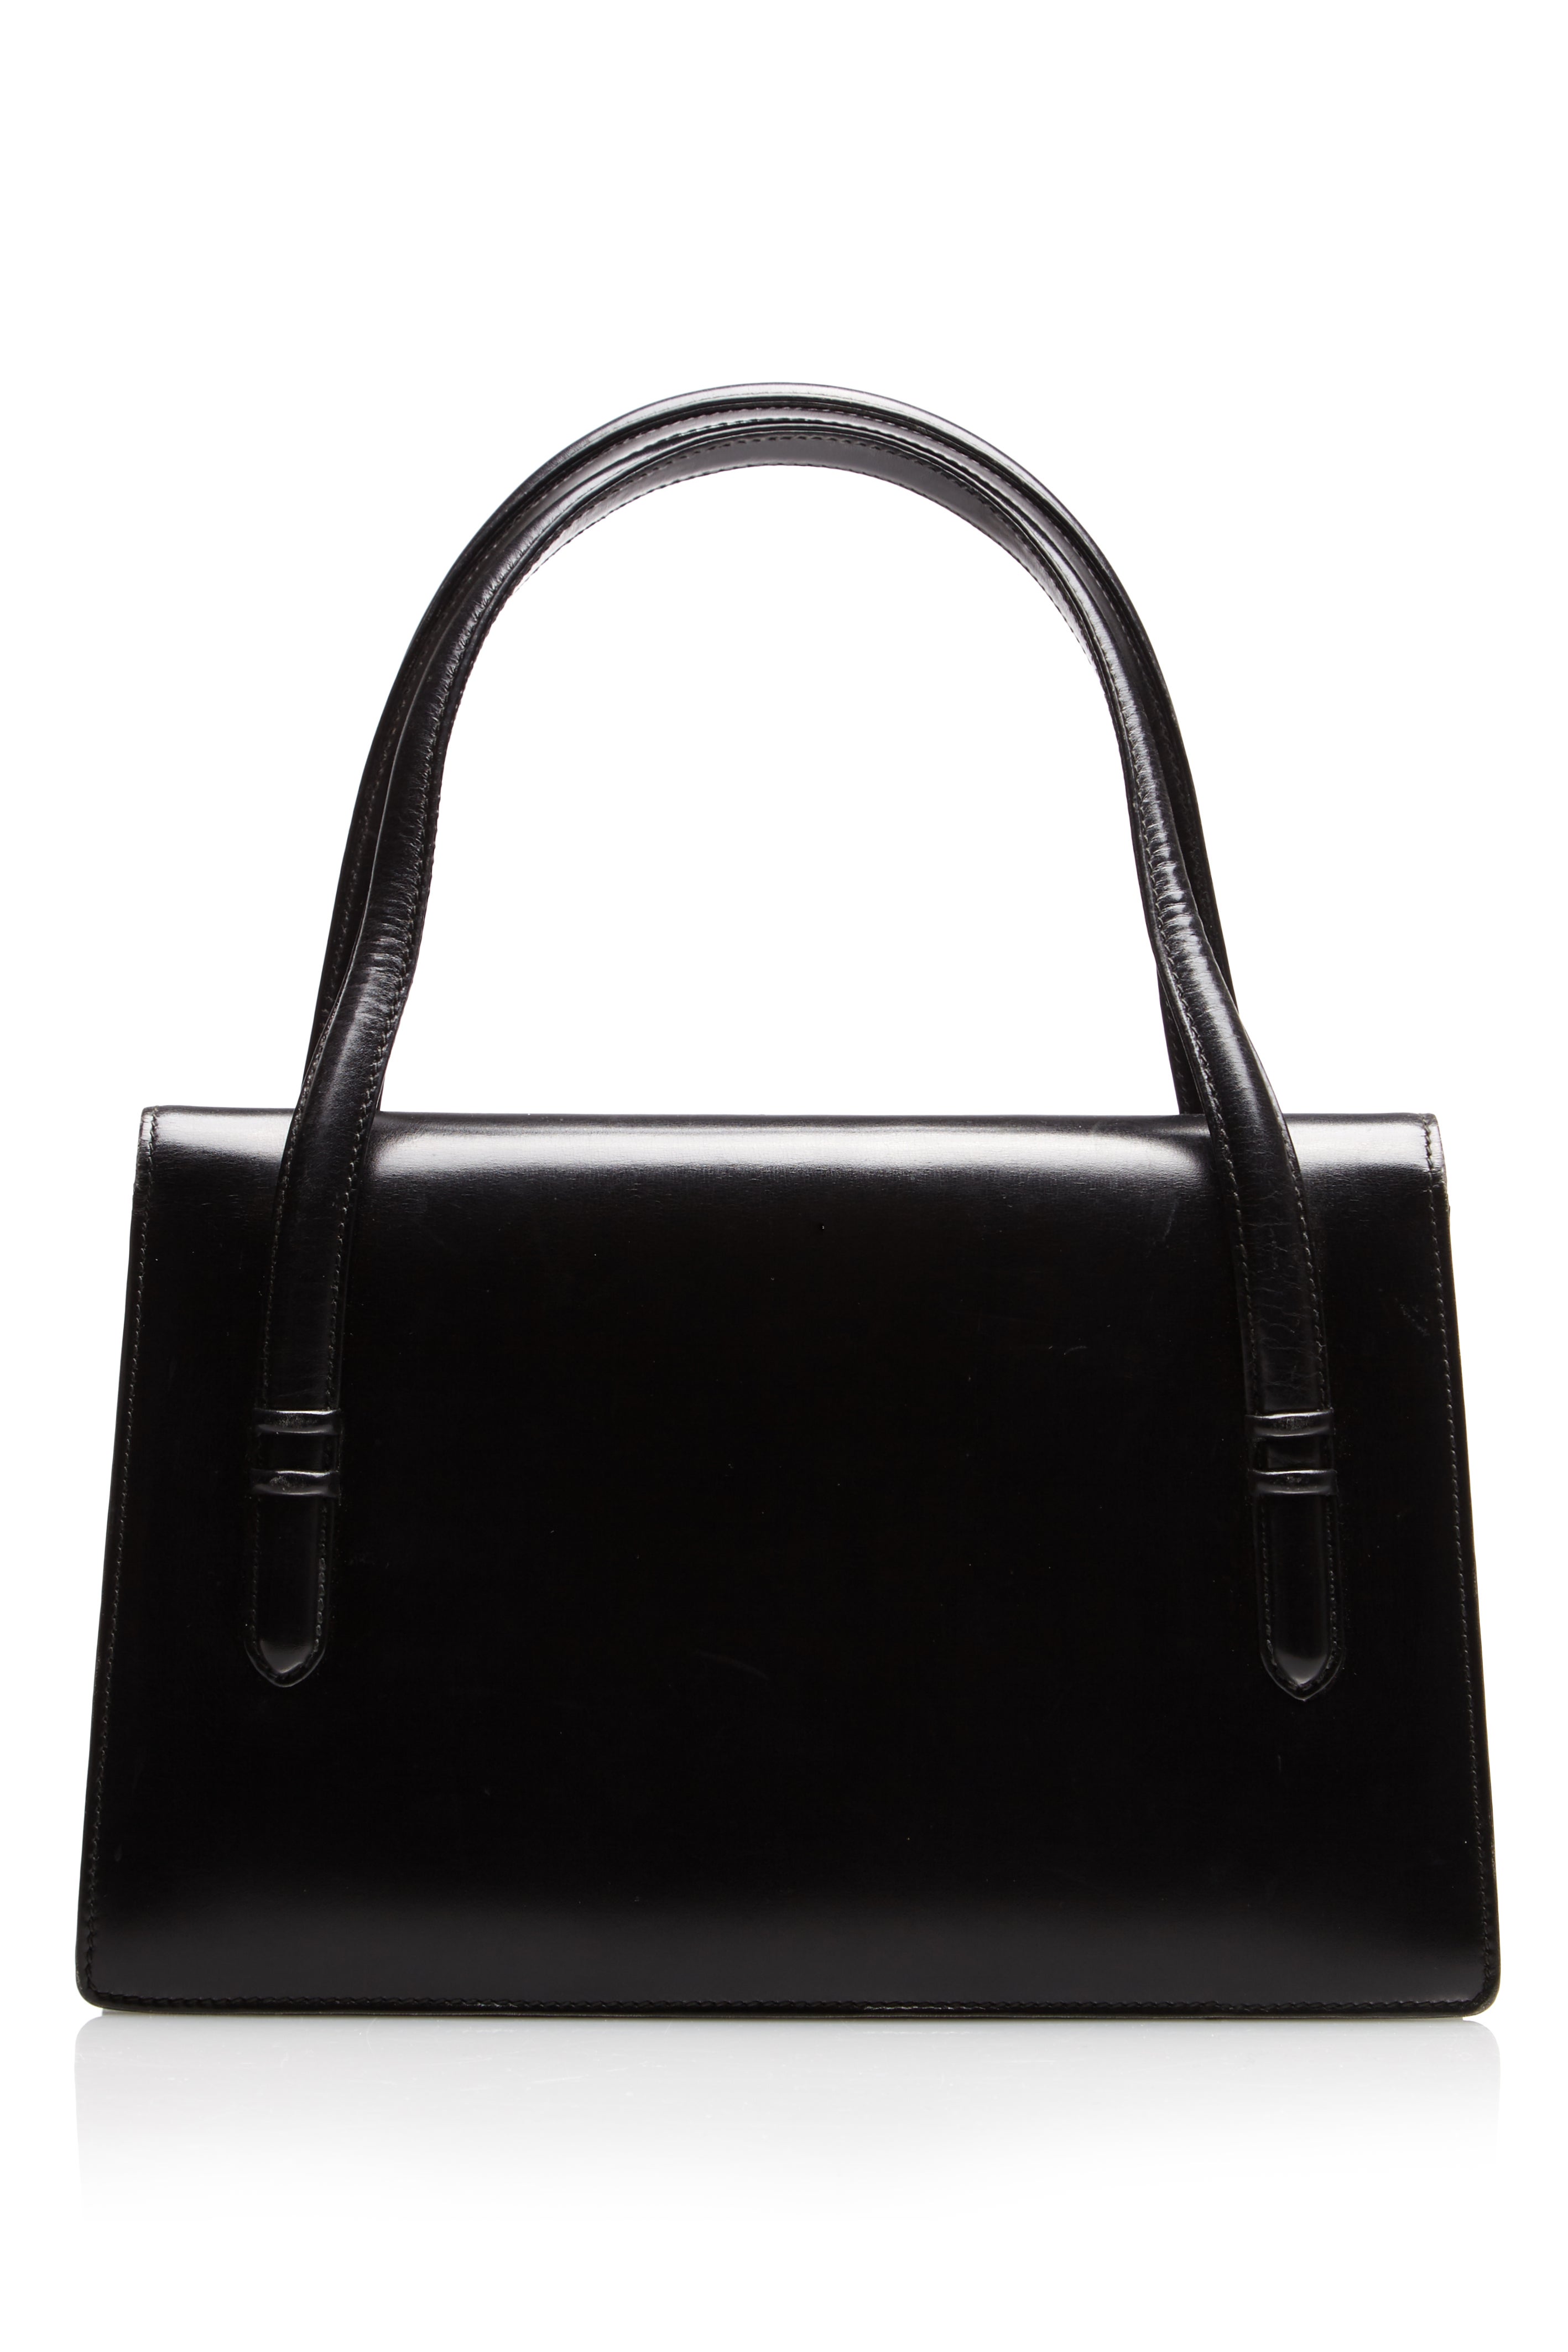 plain black gucci purse